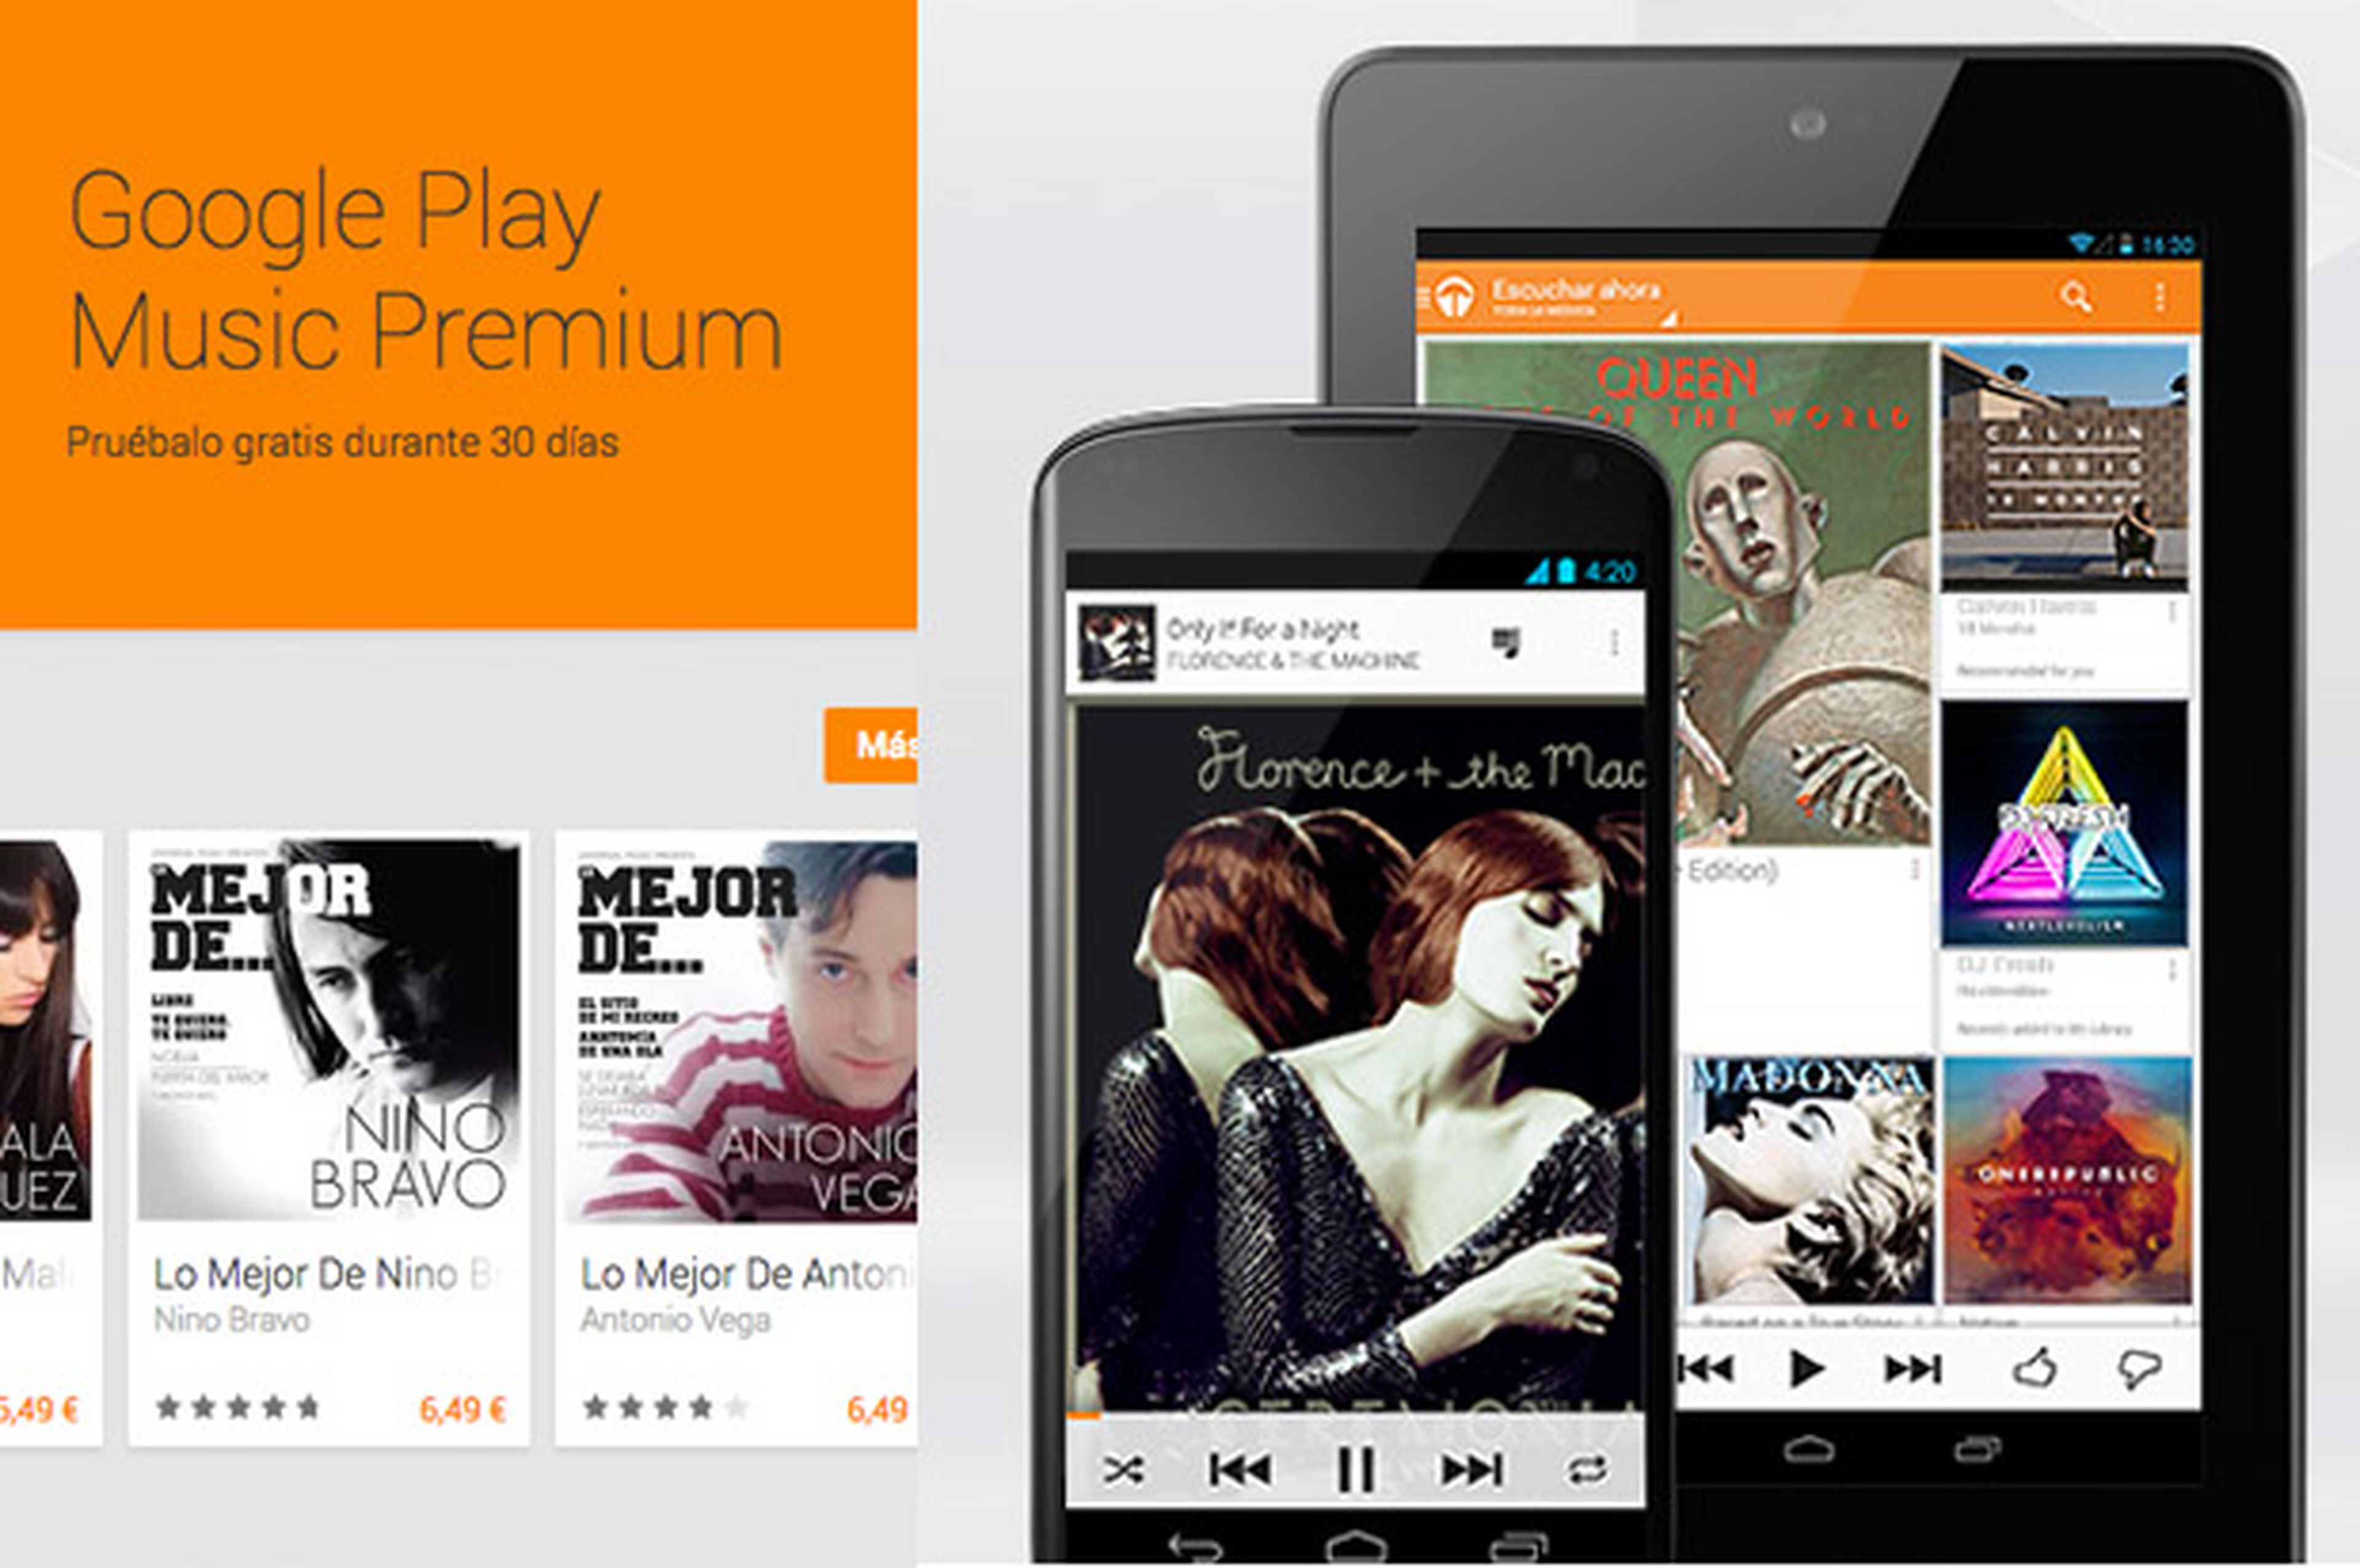 Google Play Musisc Premium disponible para Android